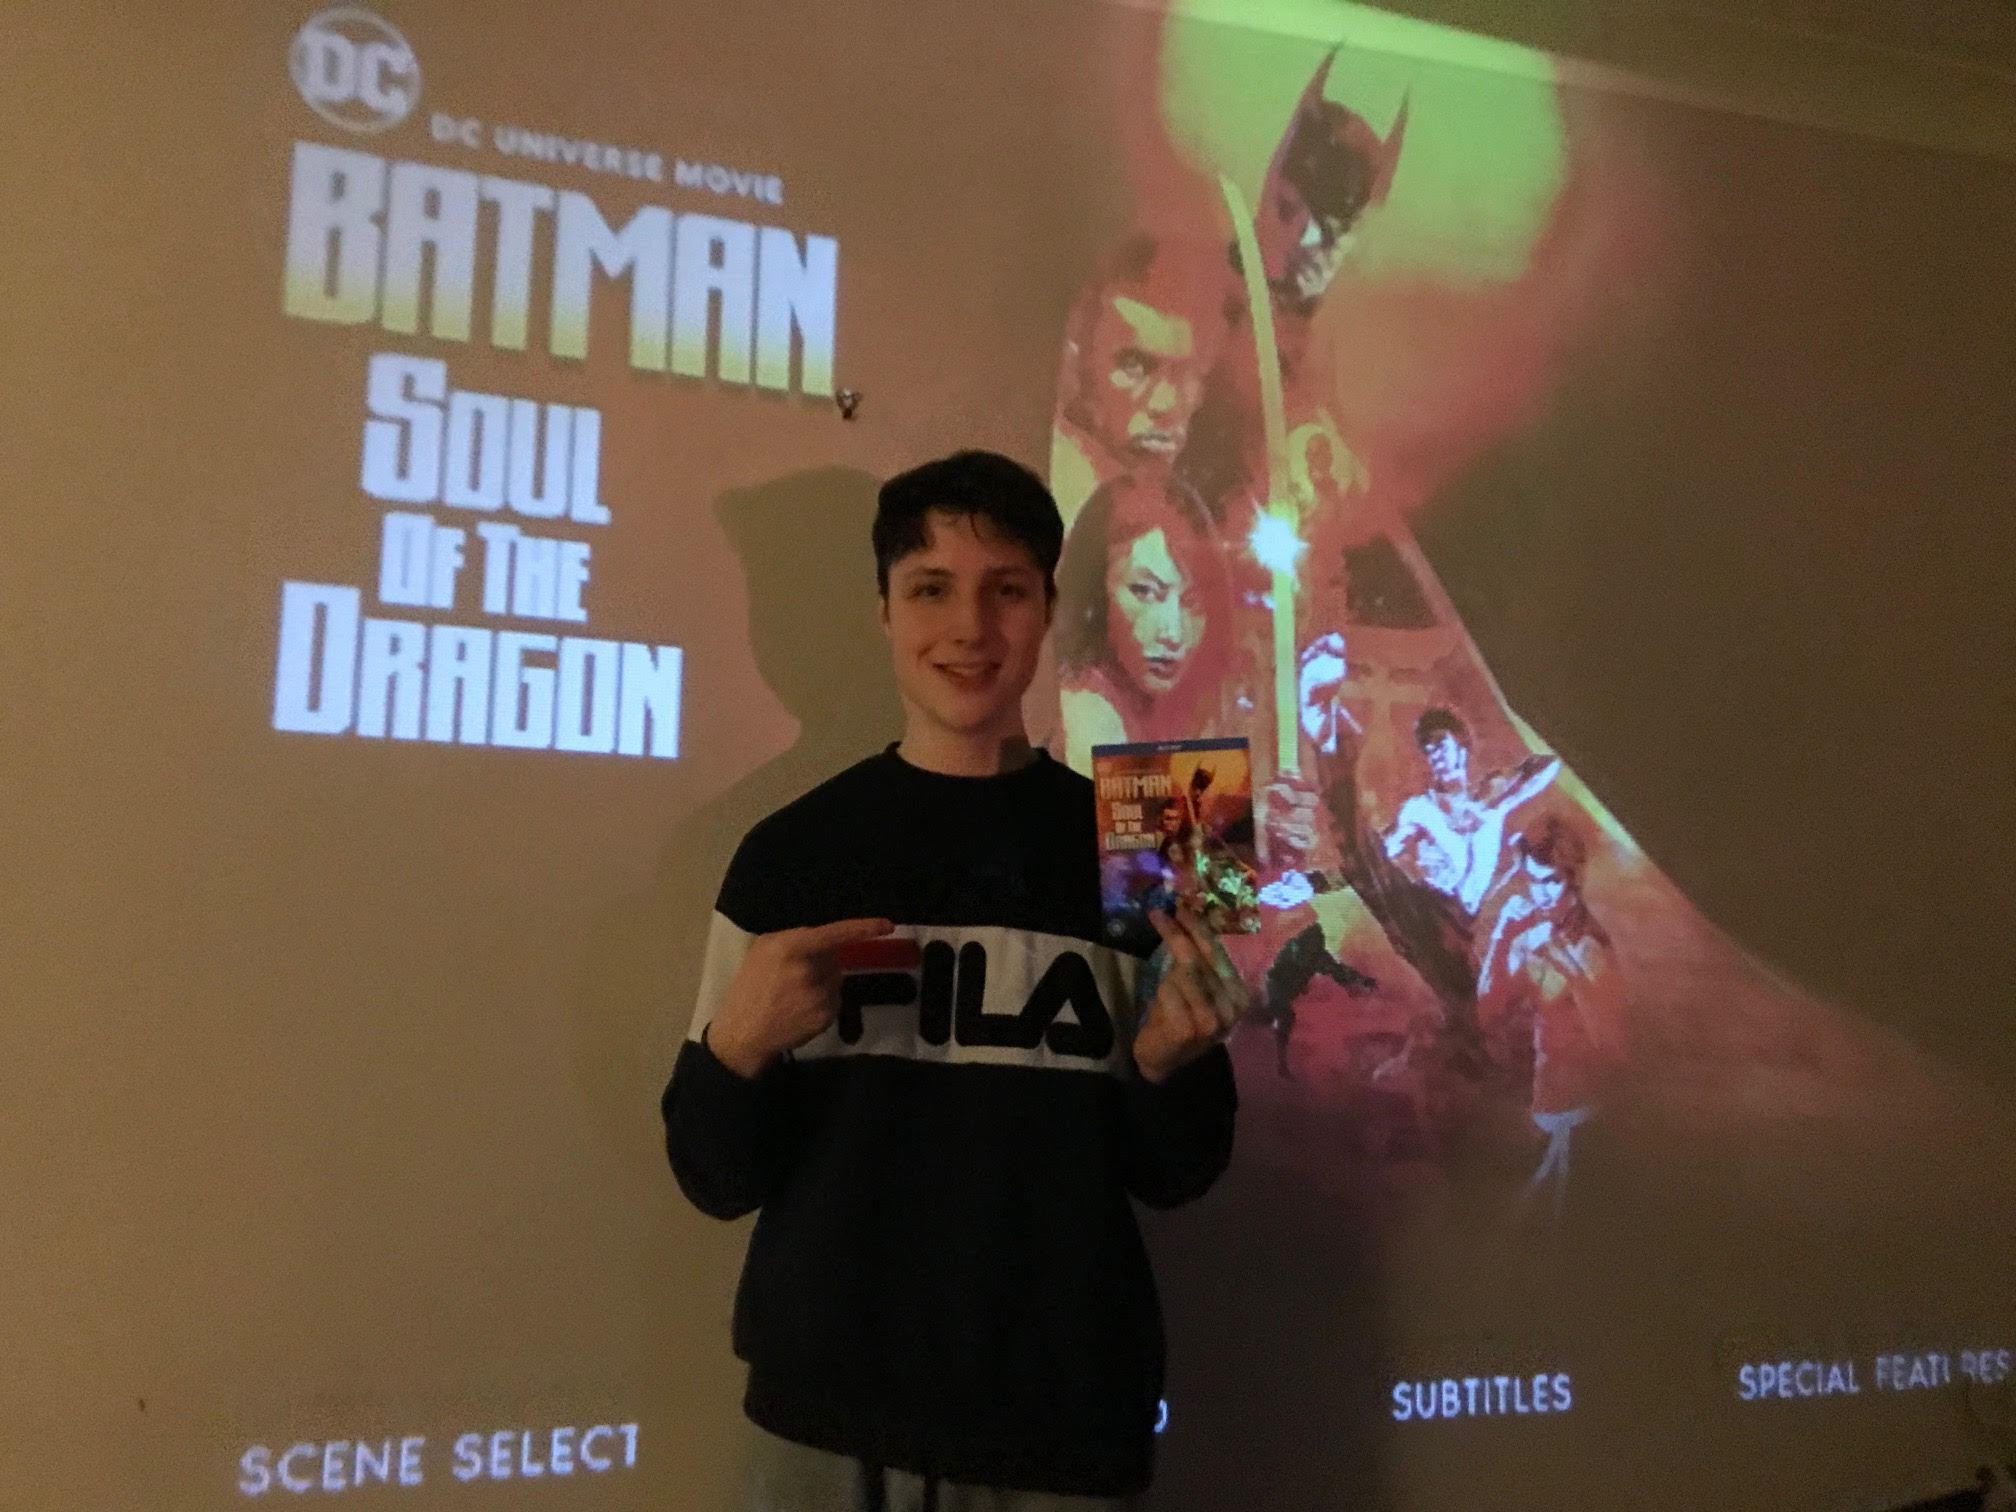 DC Comics – Batman Soul of the Dragon